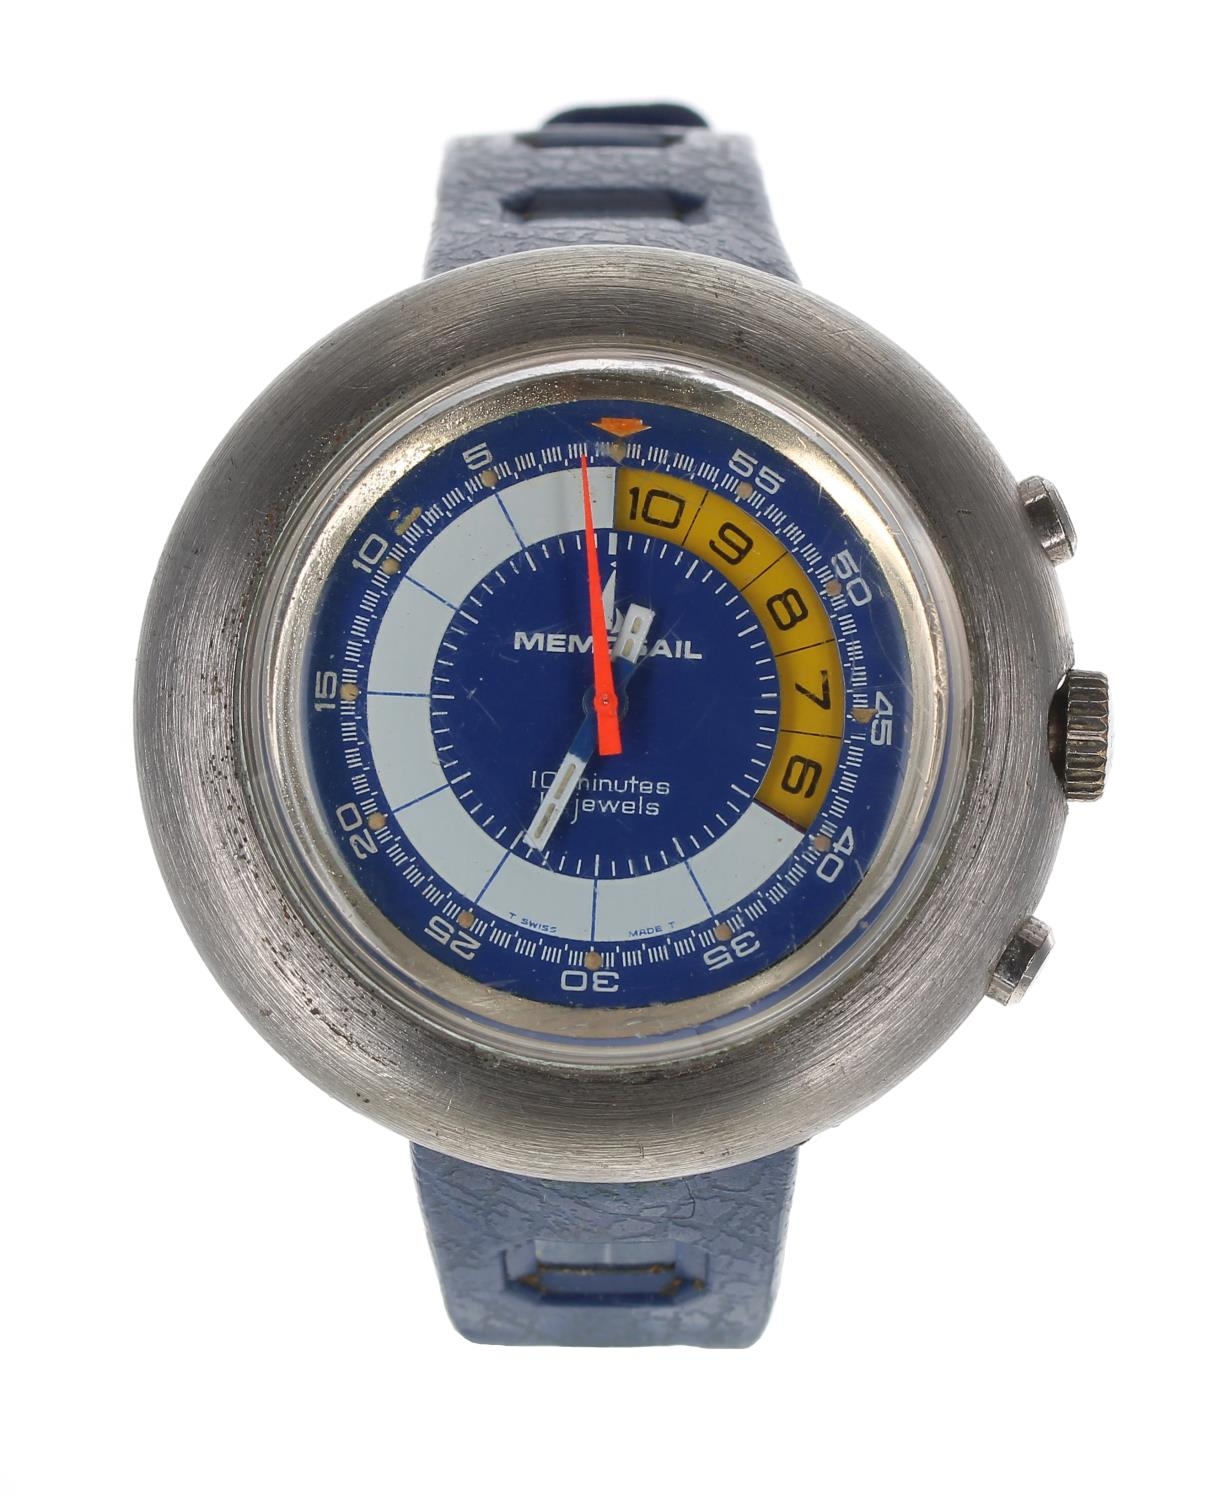 Memosail Regatta countdown chronograph gentleman's wristwatch, case no. 1000-3, circular blue dial